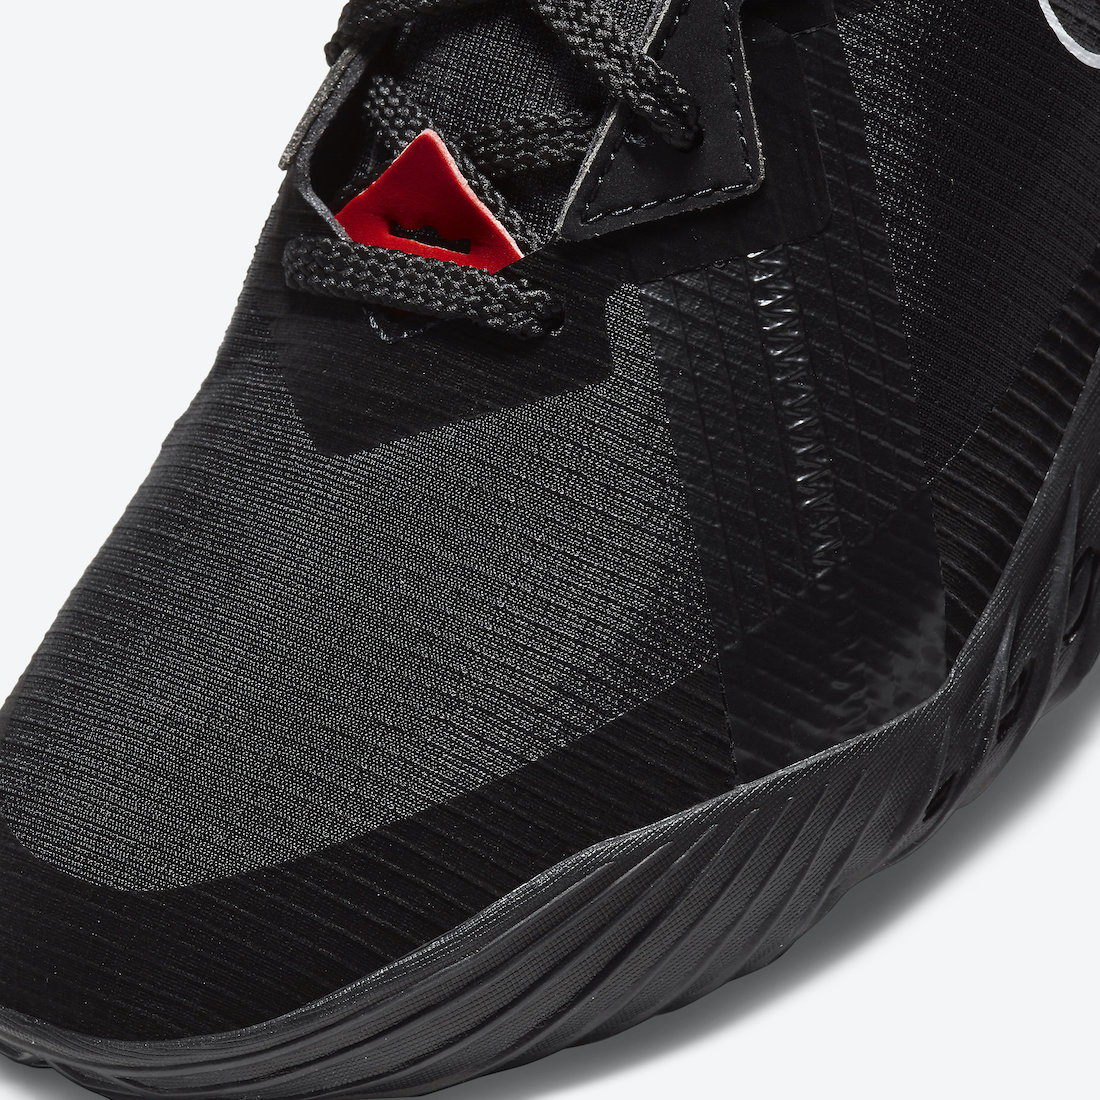 Nike LeBron 18 Low Black University Red CV7562-001 Release Date